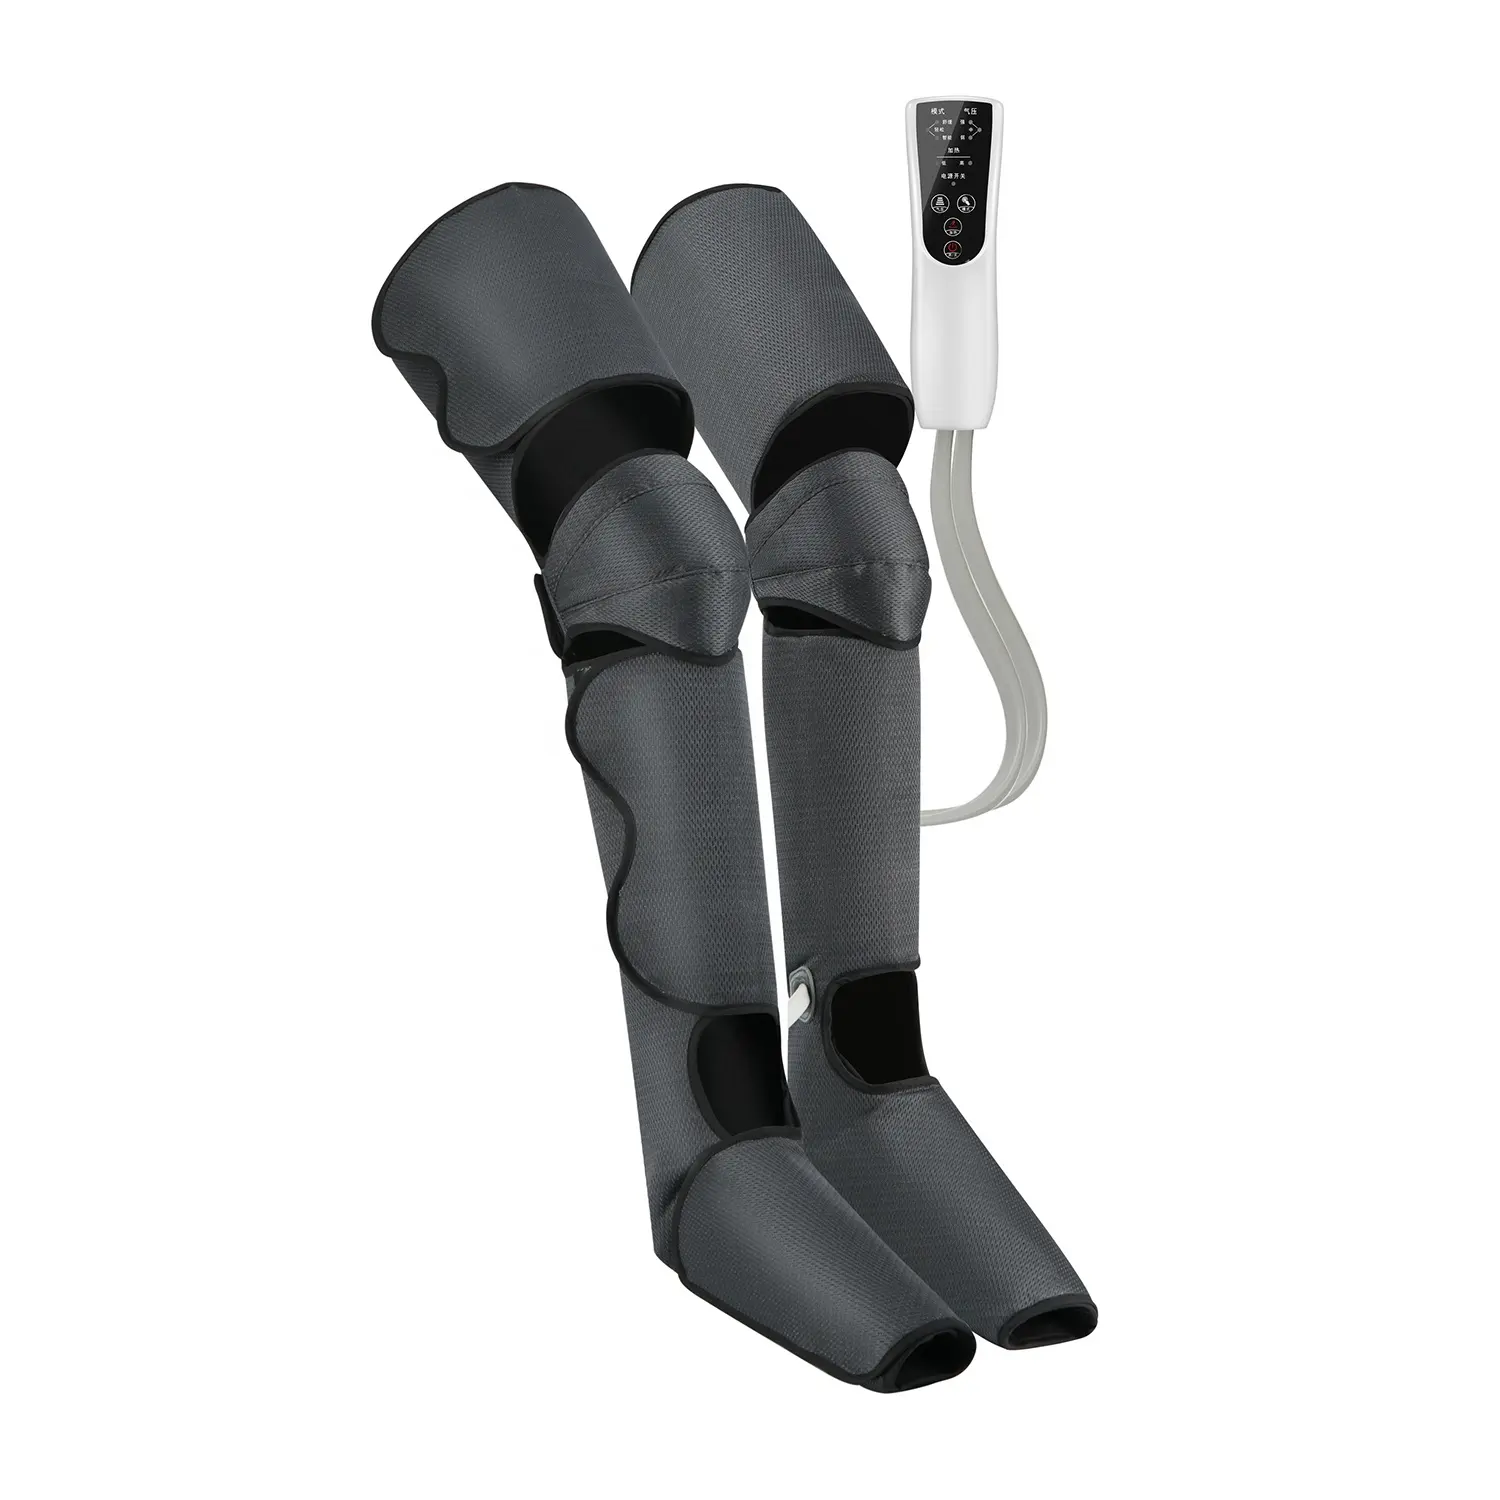 LUYAO 670D air compression gonflable pneumatique masseur complet de jambes genou jambes enveloppant masseur de compression de jambes